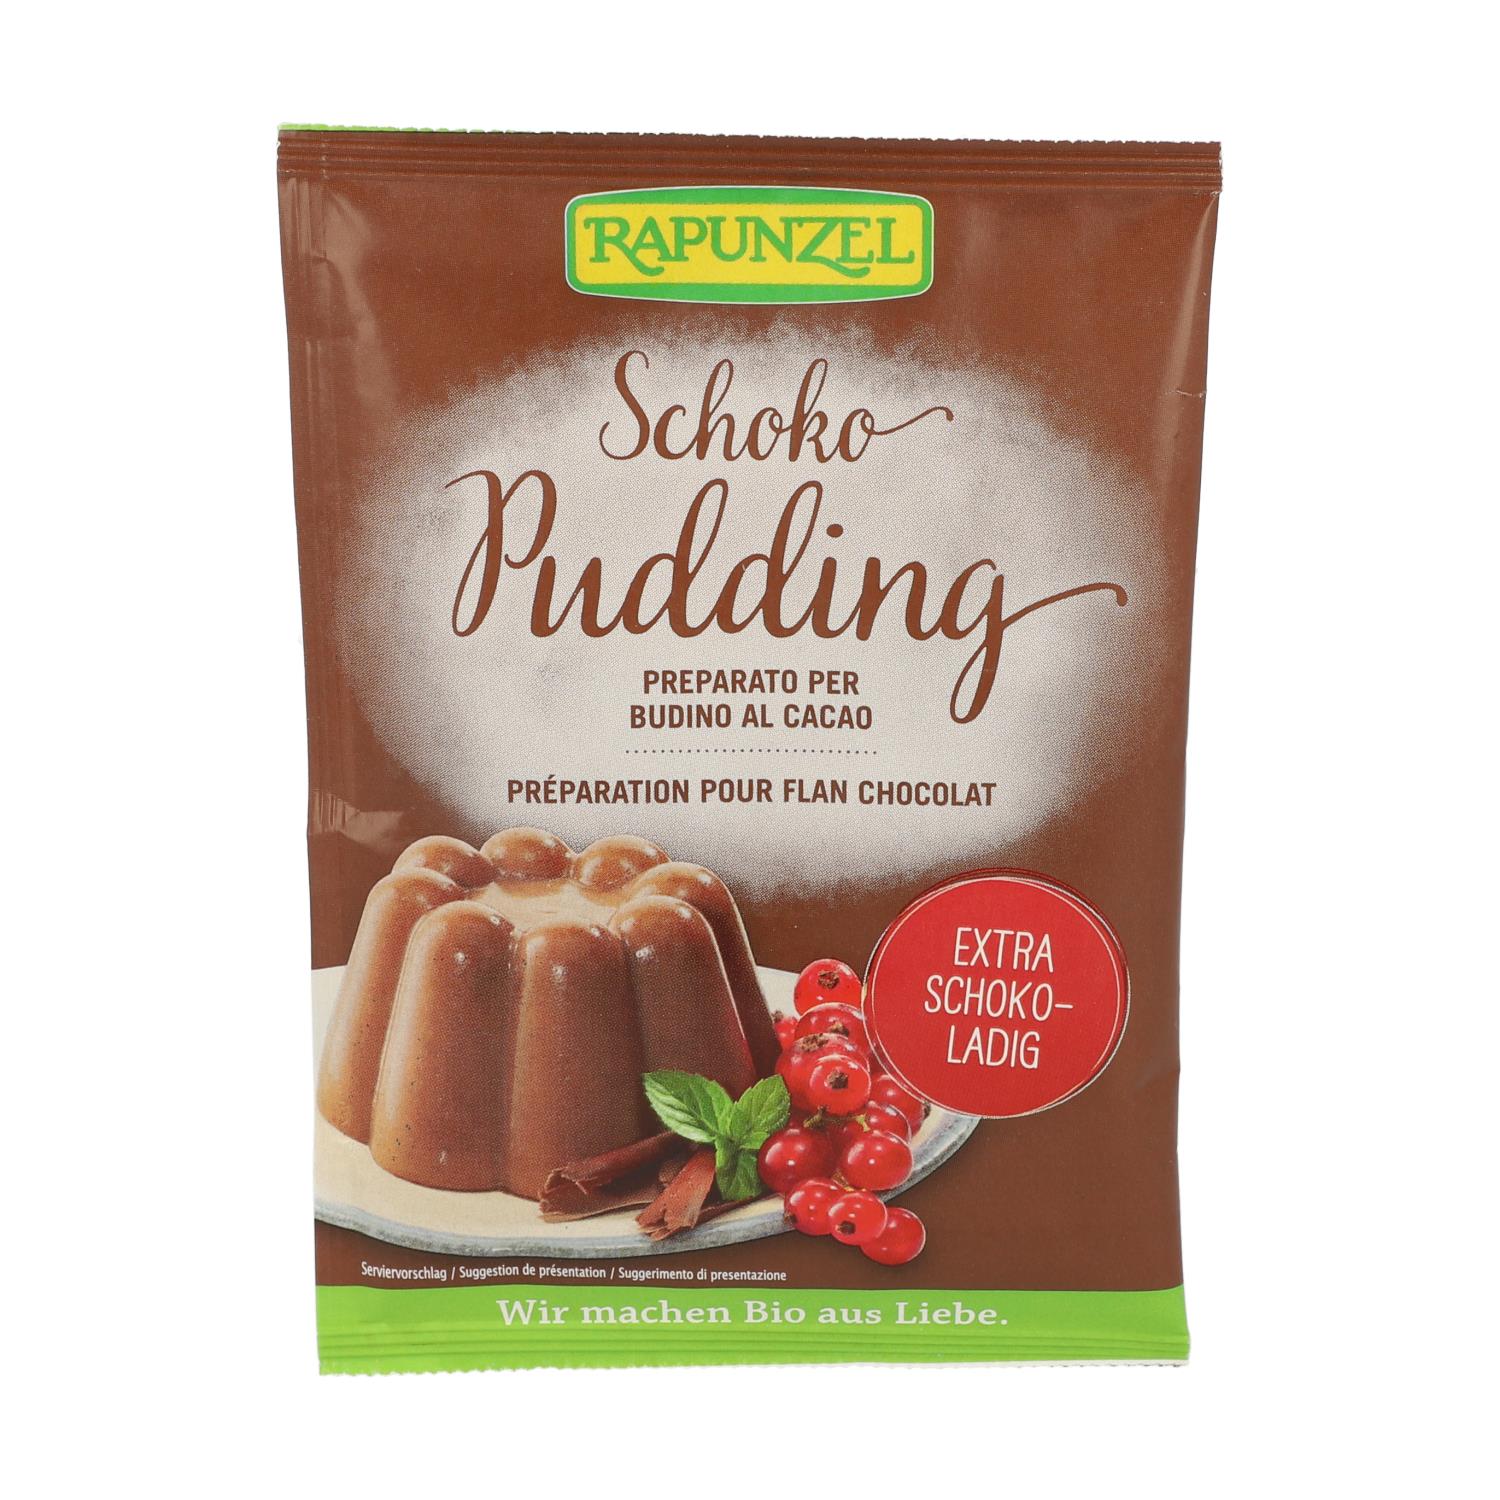 Schoko-Pudding kbA